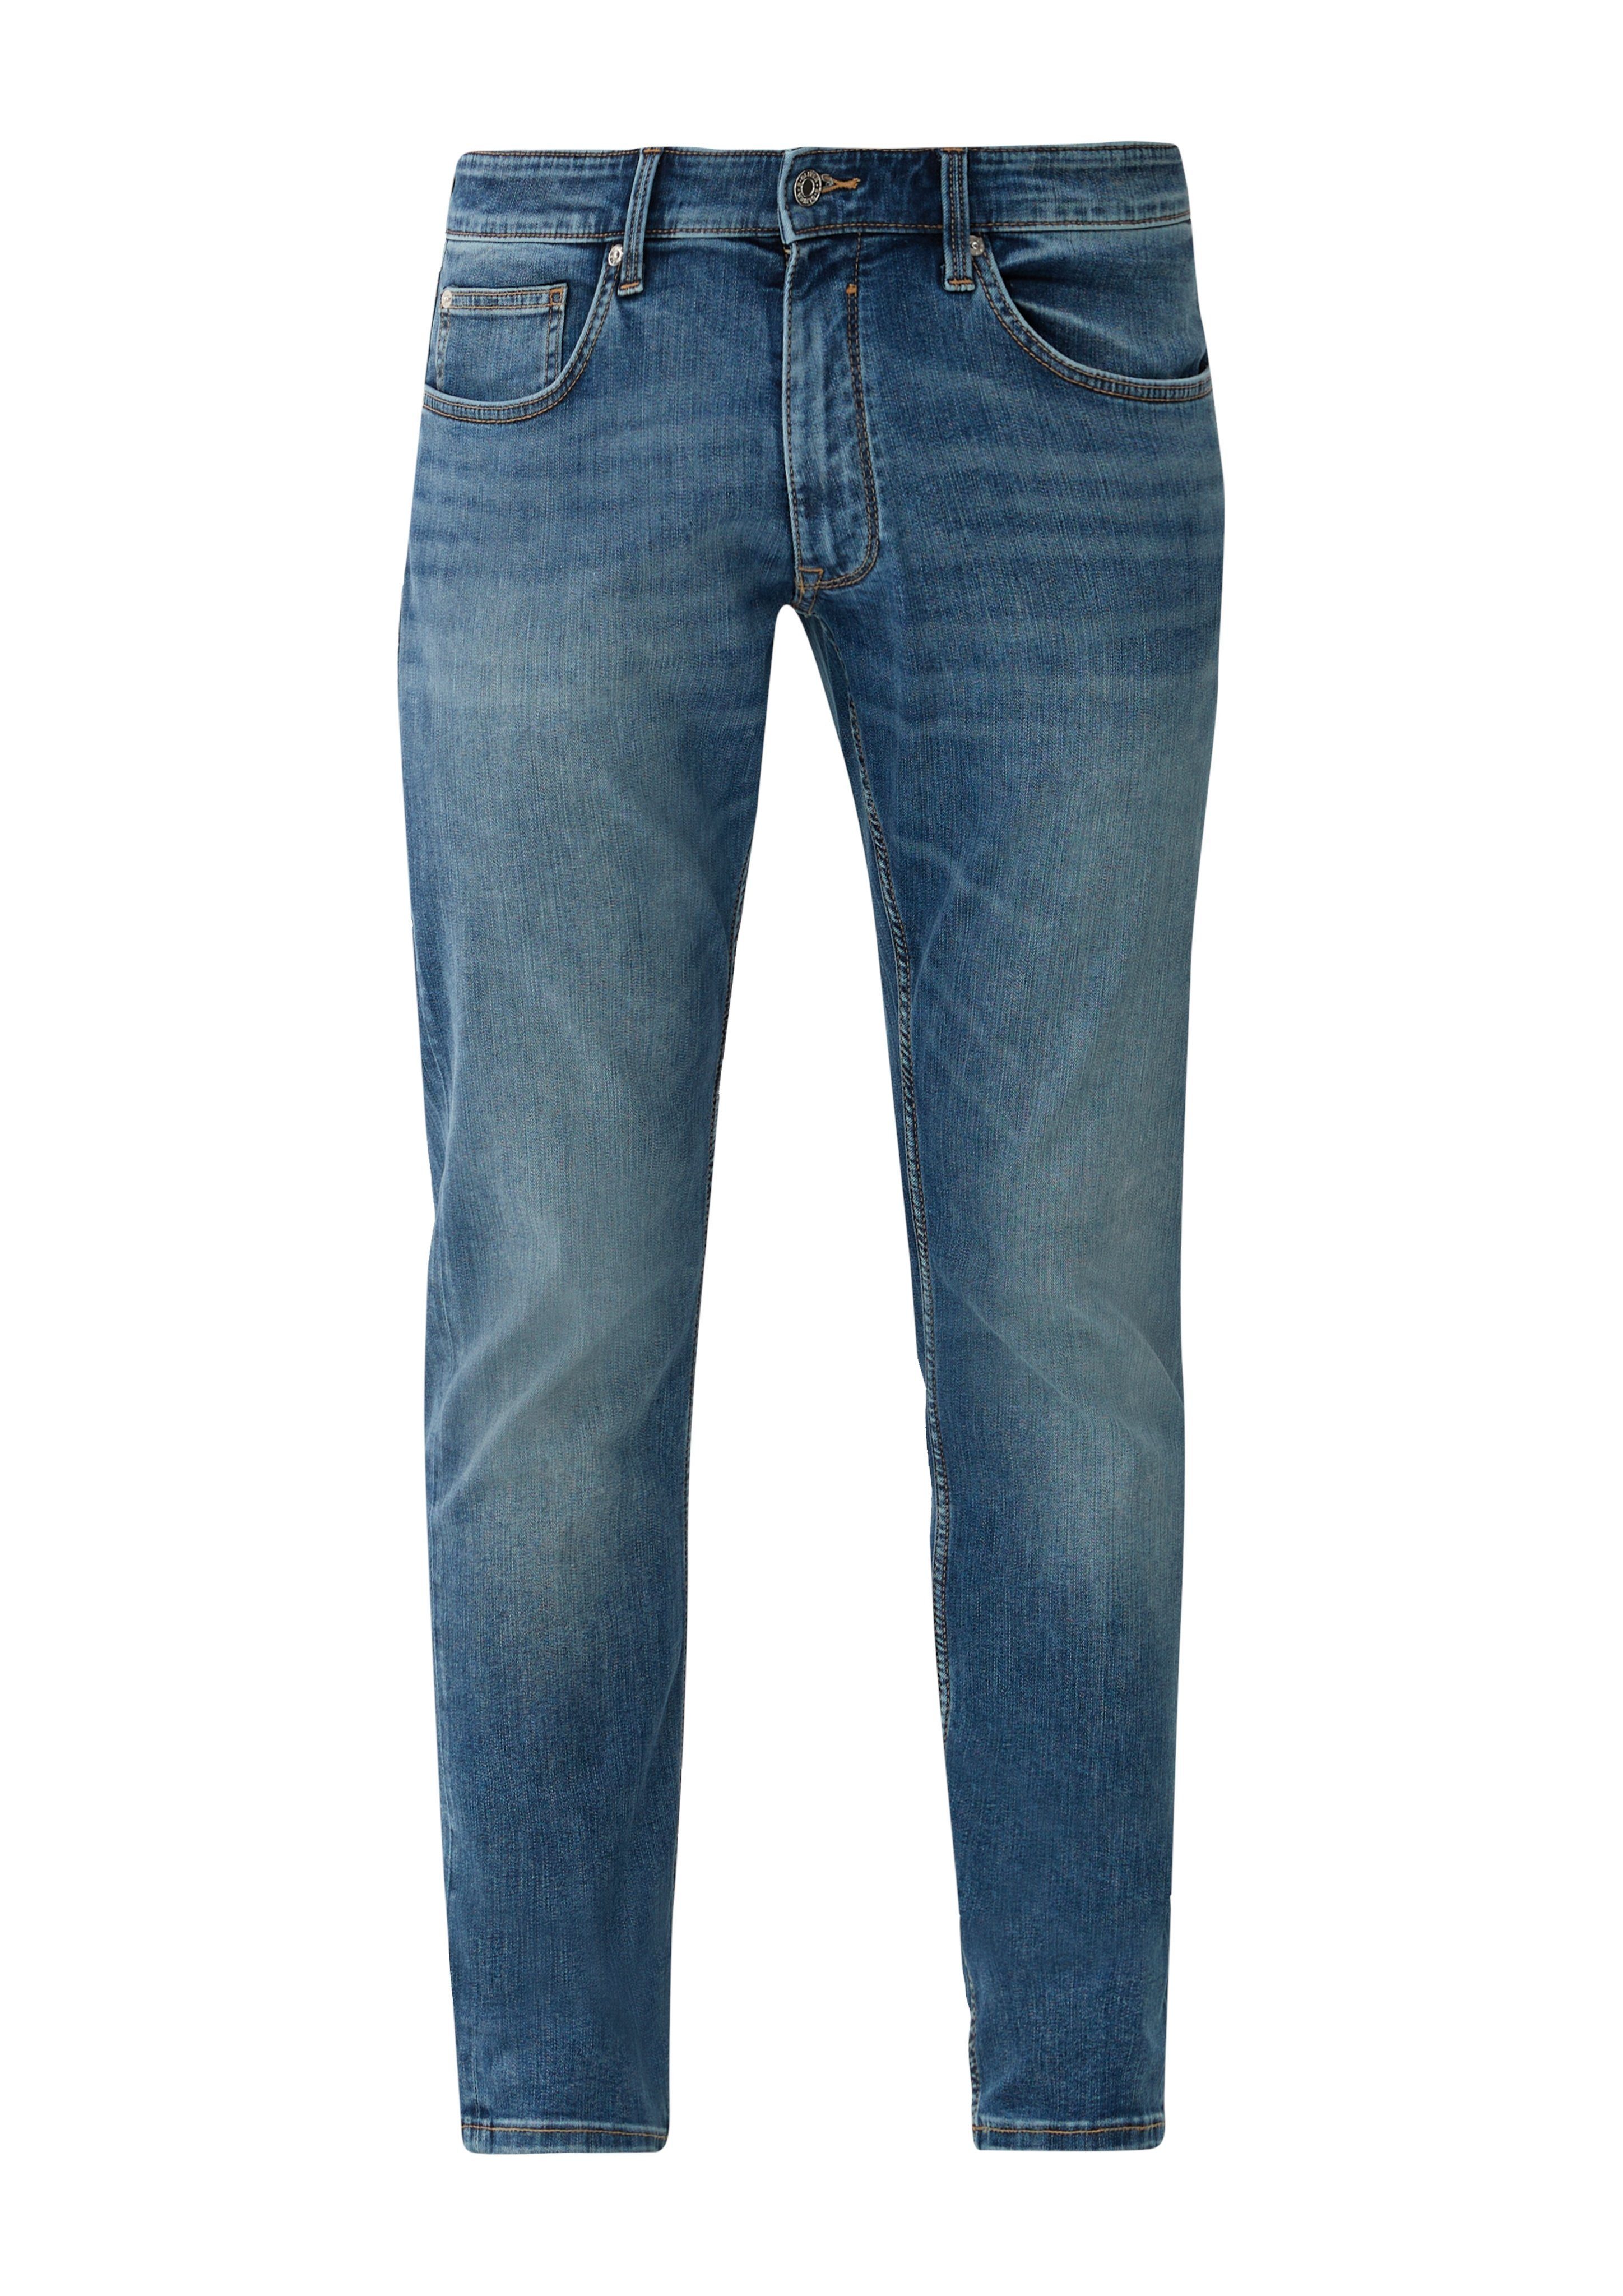 Keith BLUE Rise 53Z4 Jeans Slim / s.Oliver Slim-fit-Jeans Leg Slim-Fit Fit / Mid /